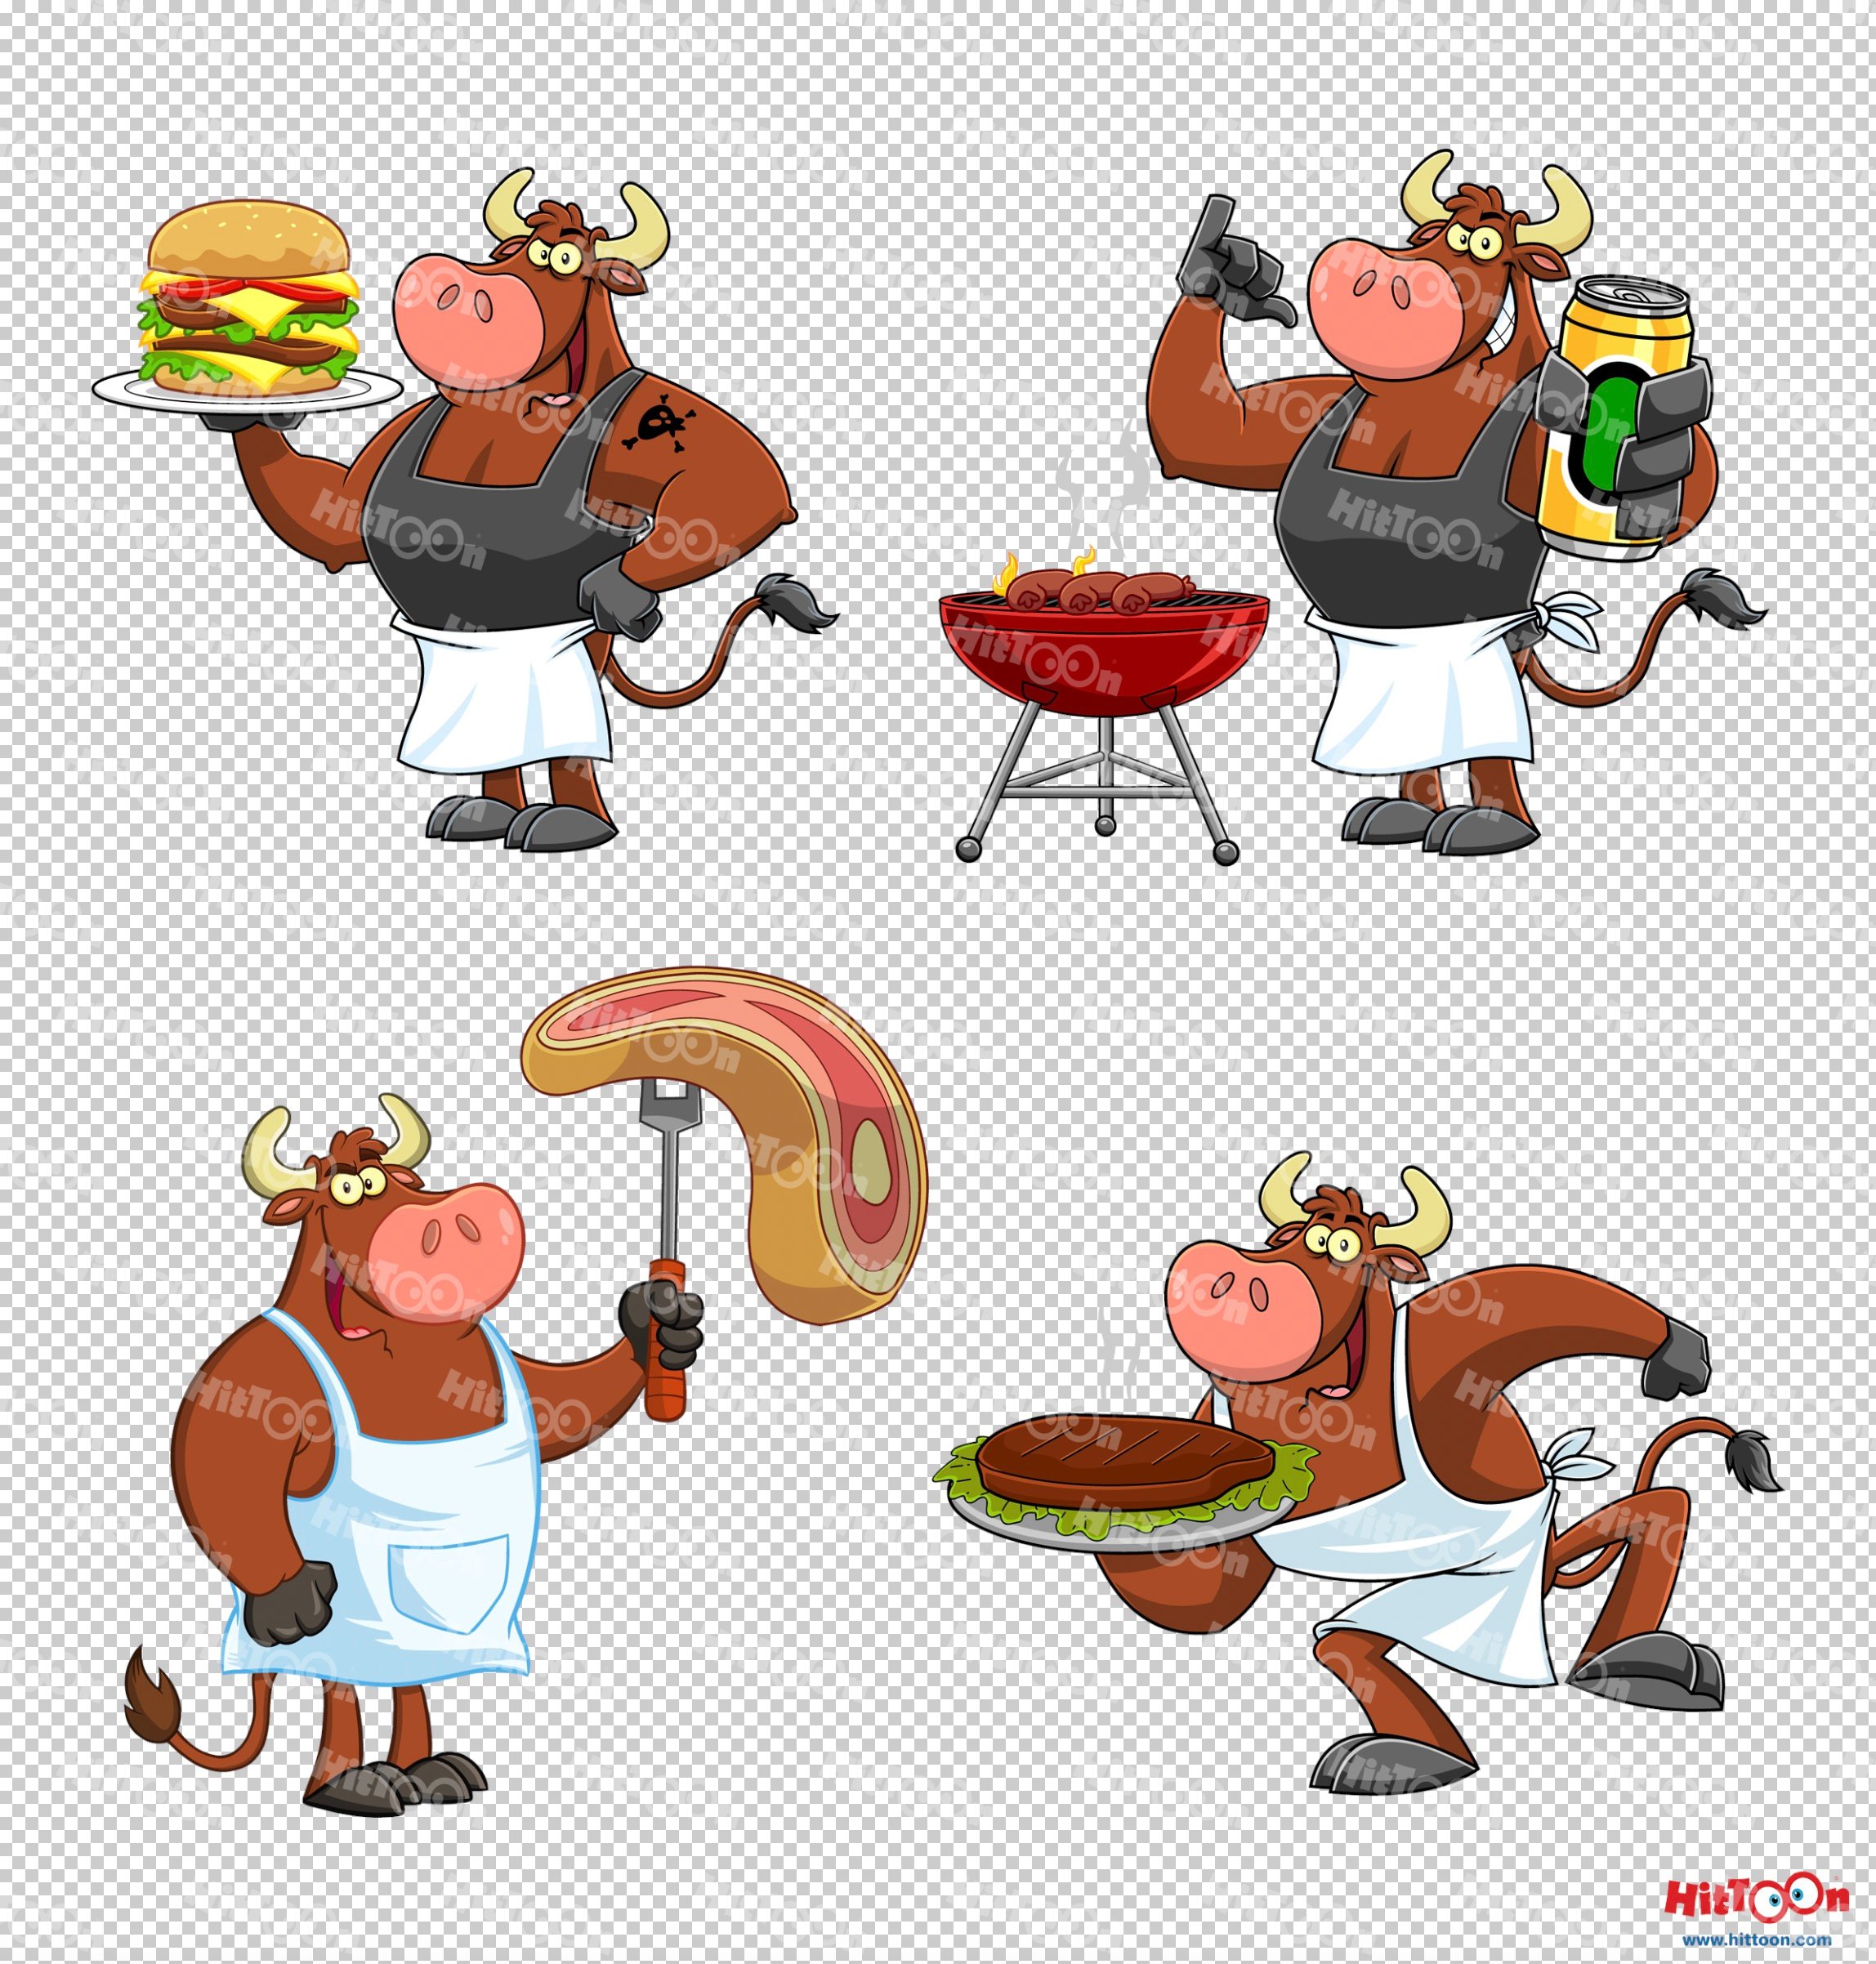 Bull Cartoon Mascot Character 3 preview image.